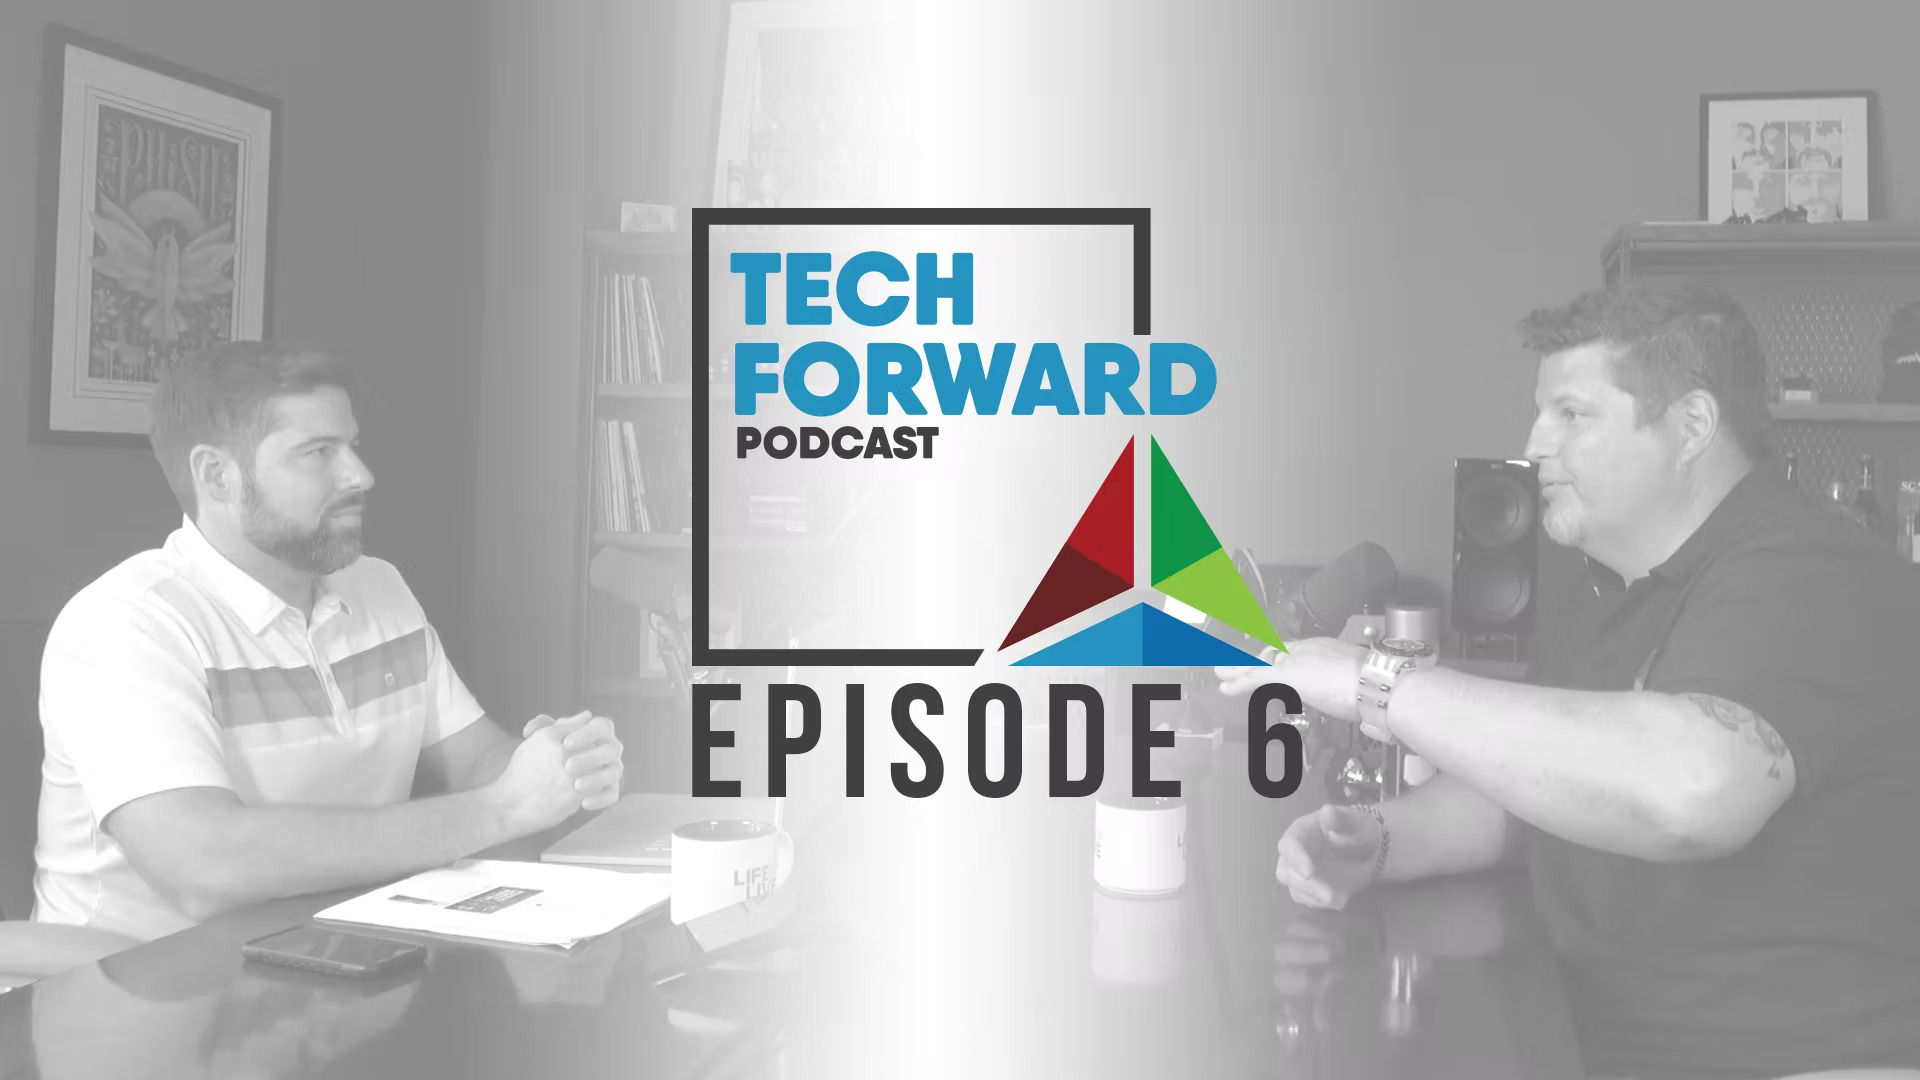 Tech forward podcast episode 6.